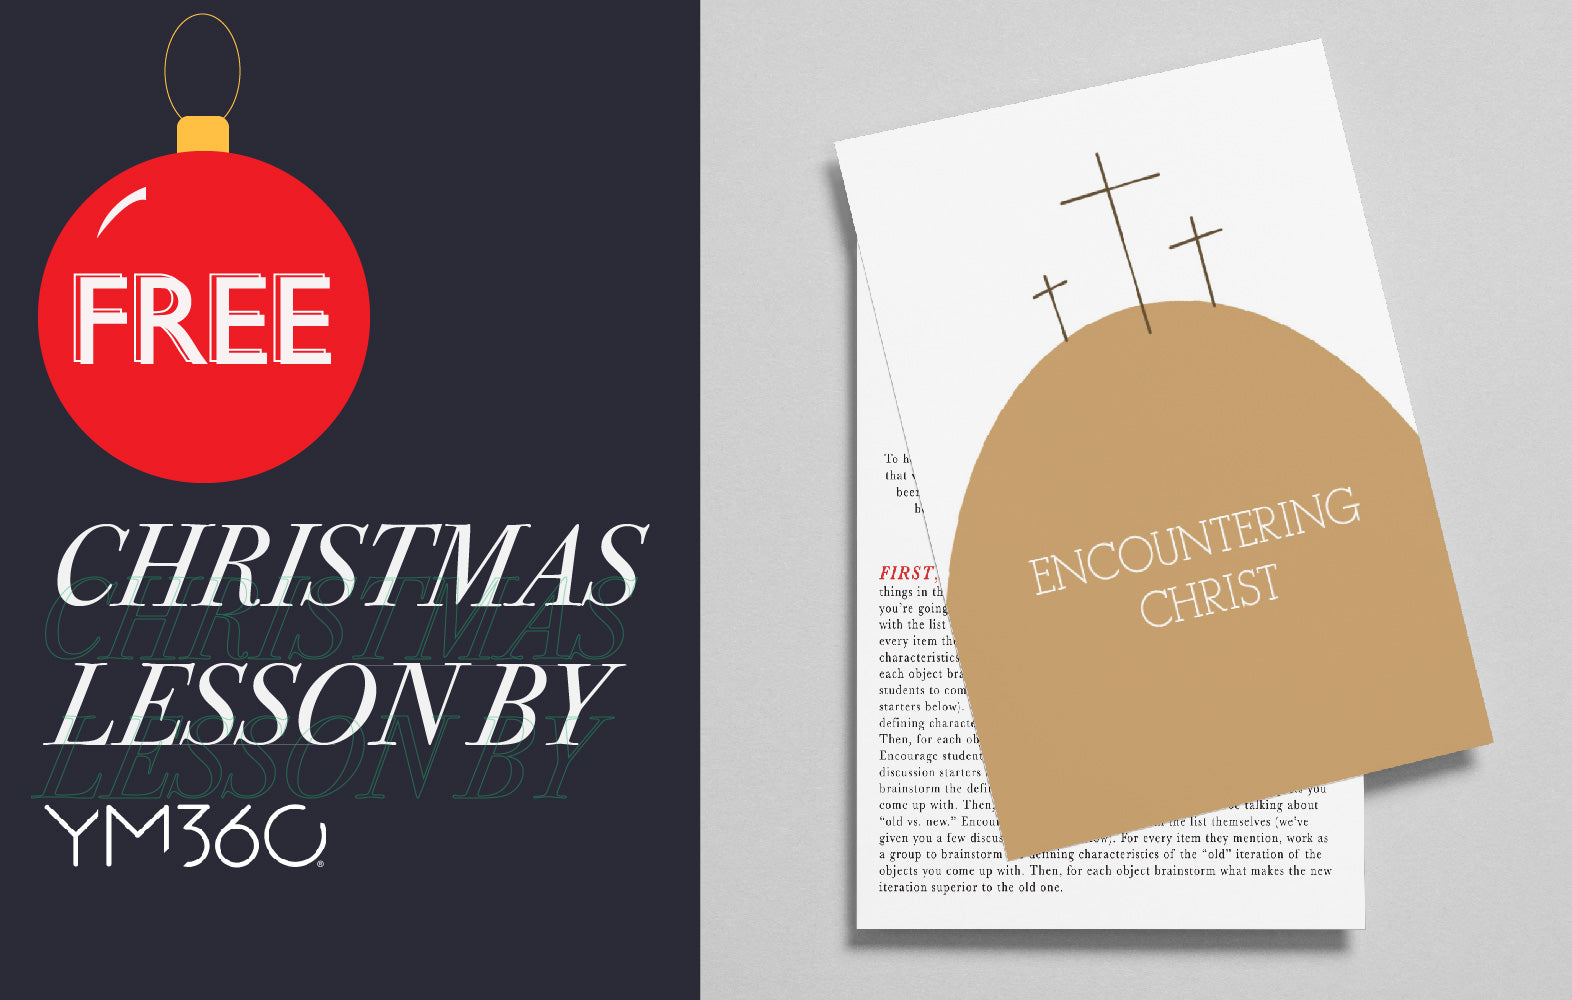 Free Christmas Lesson | Encountering Christ